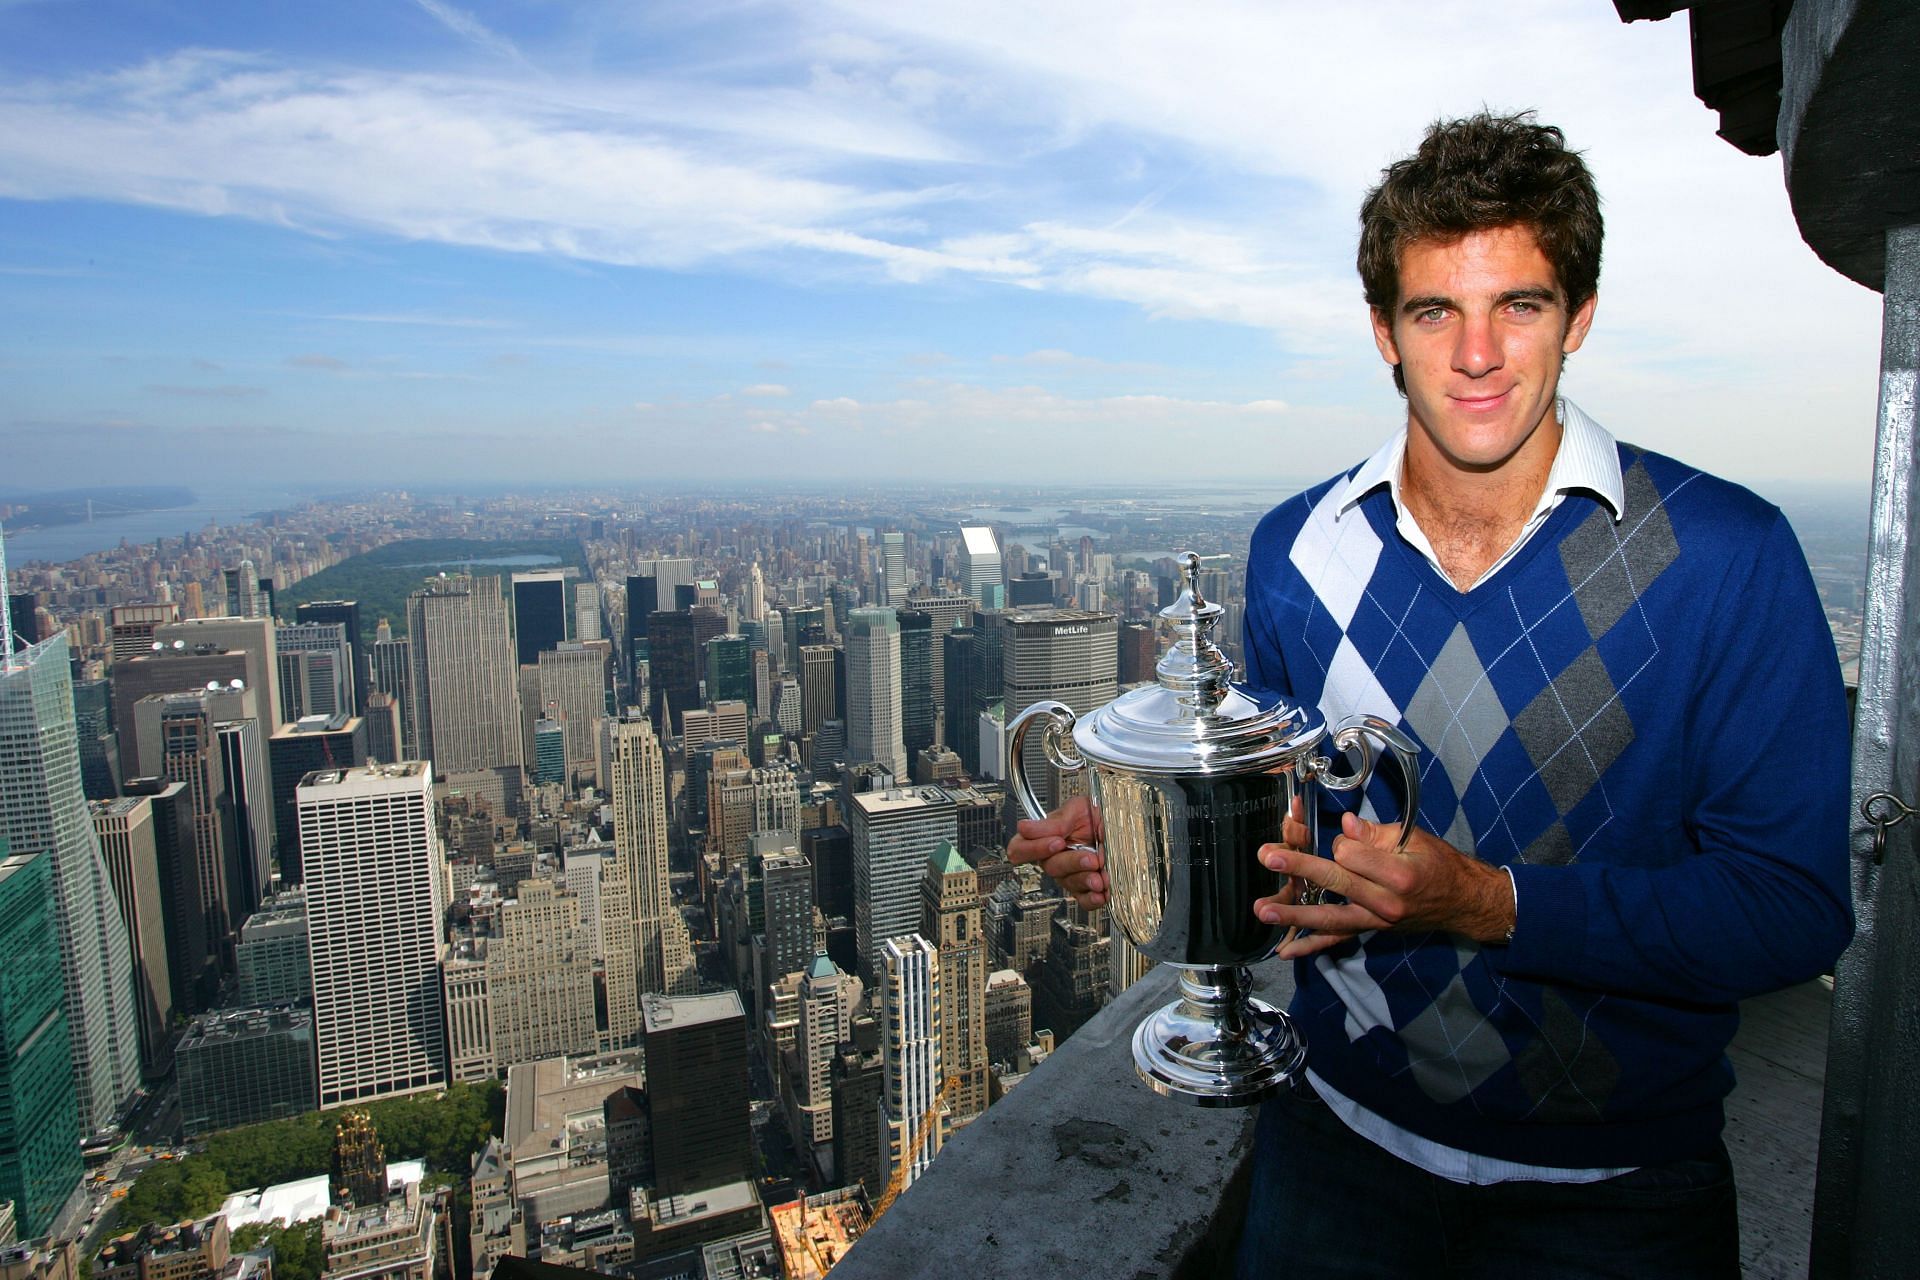 Juan Martin del Potro downed five-time defending champion Roger Federer to win 2009 US Open